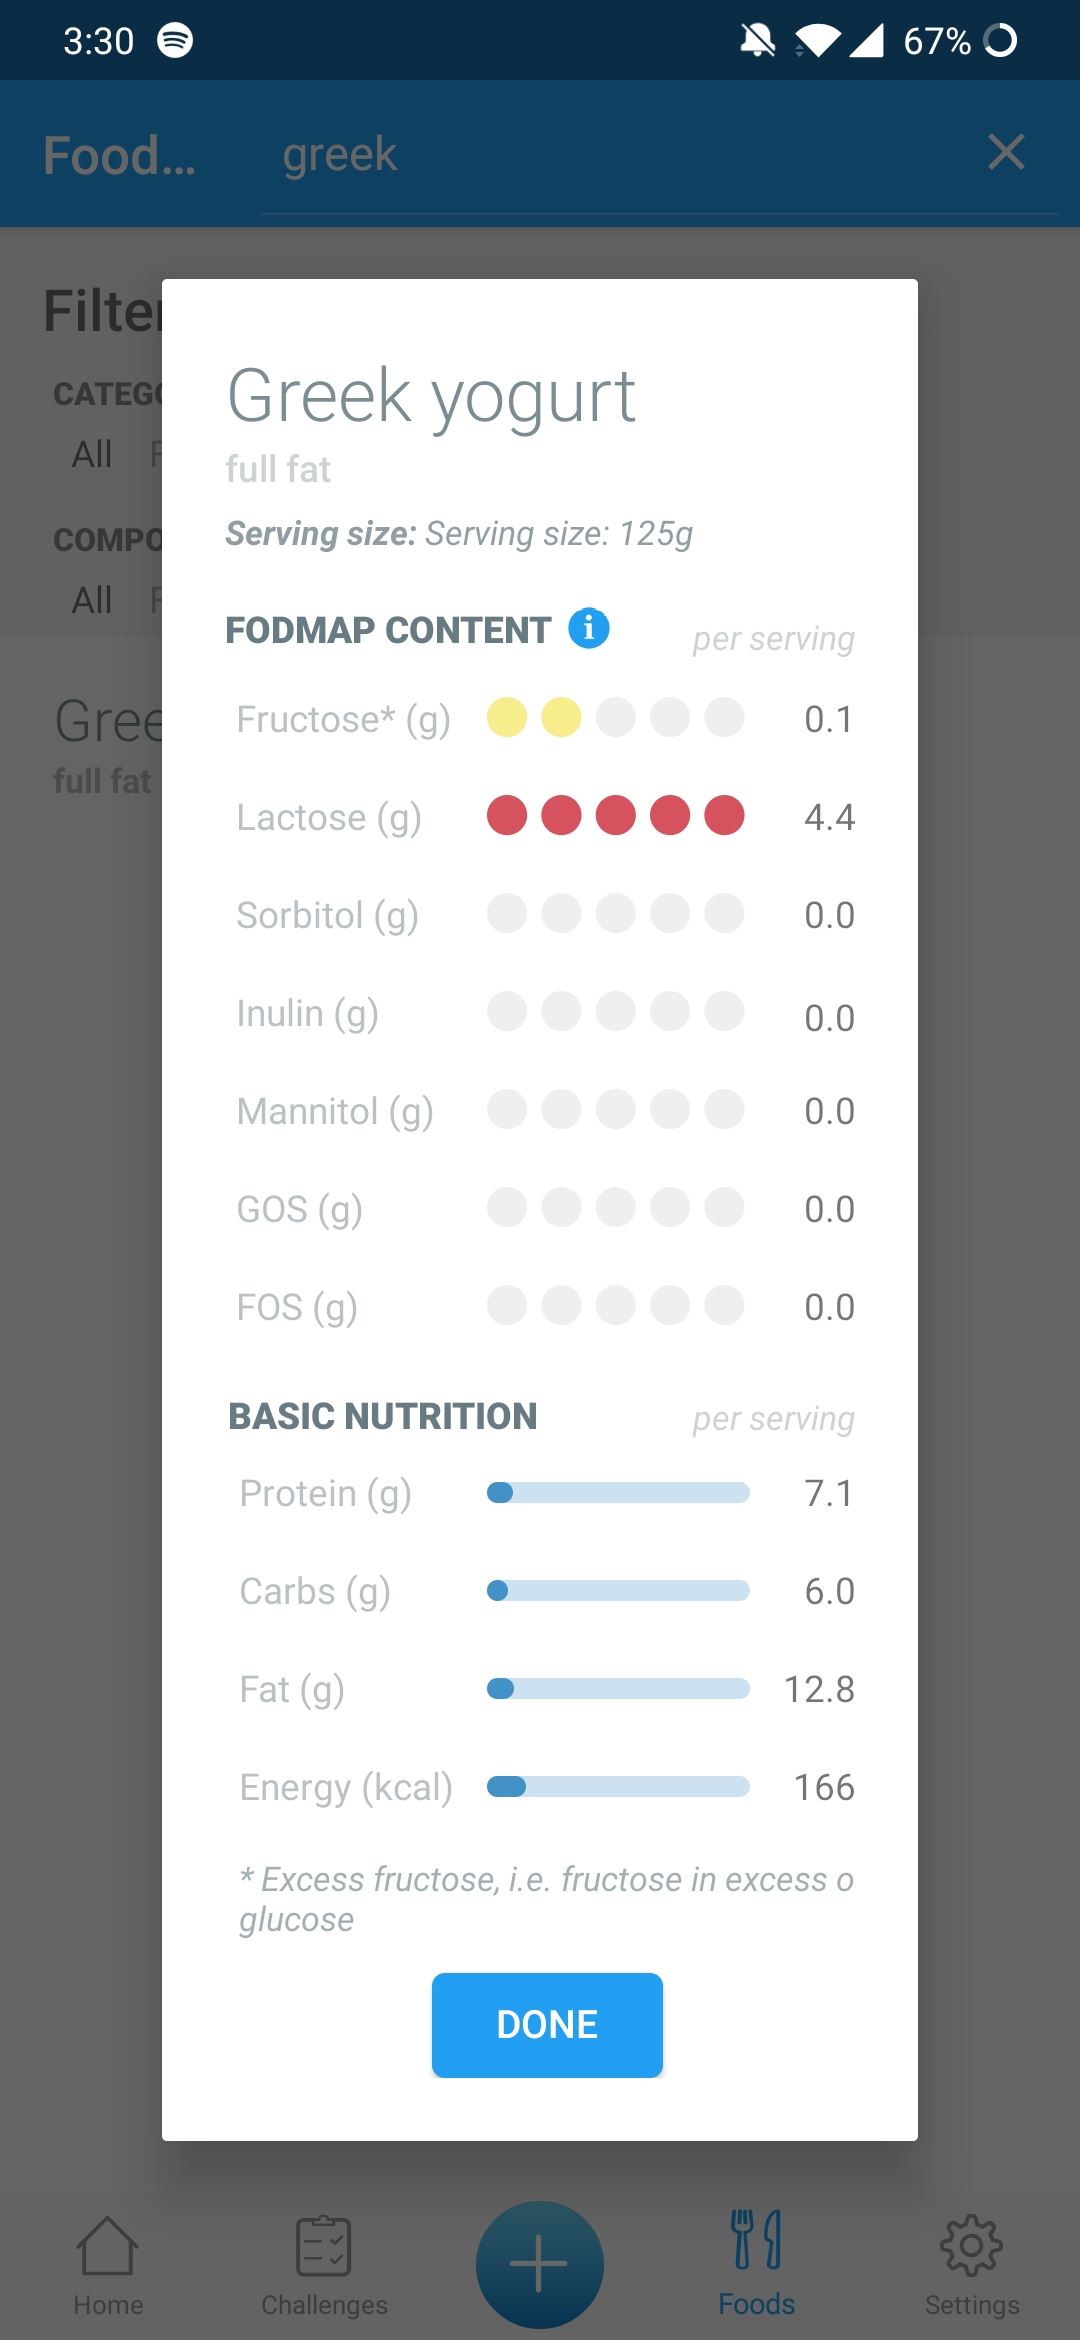 screenshot showing FODMAP content of greek yogurt on the FoodMarble app